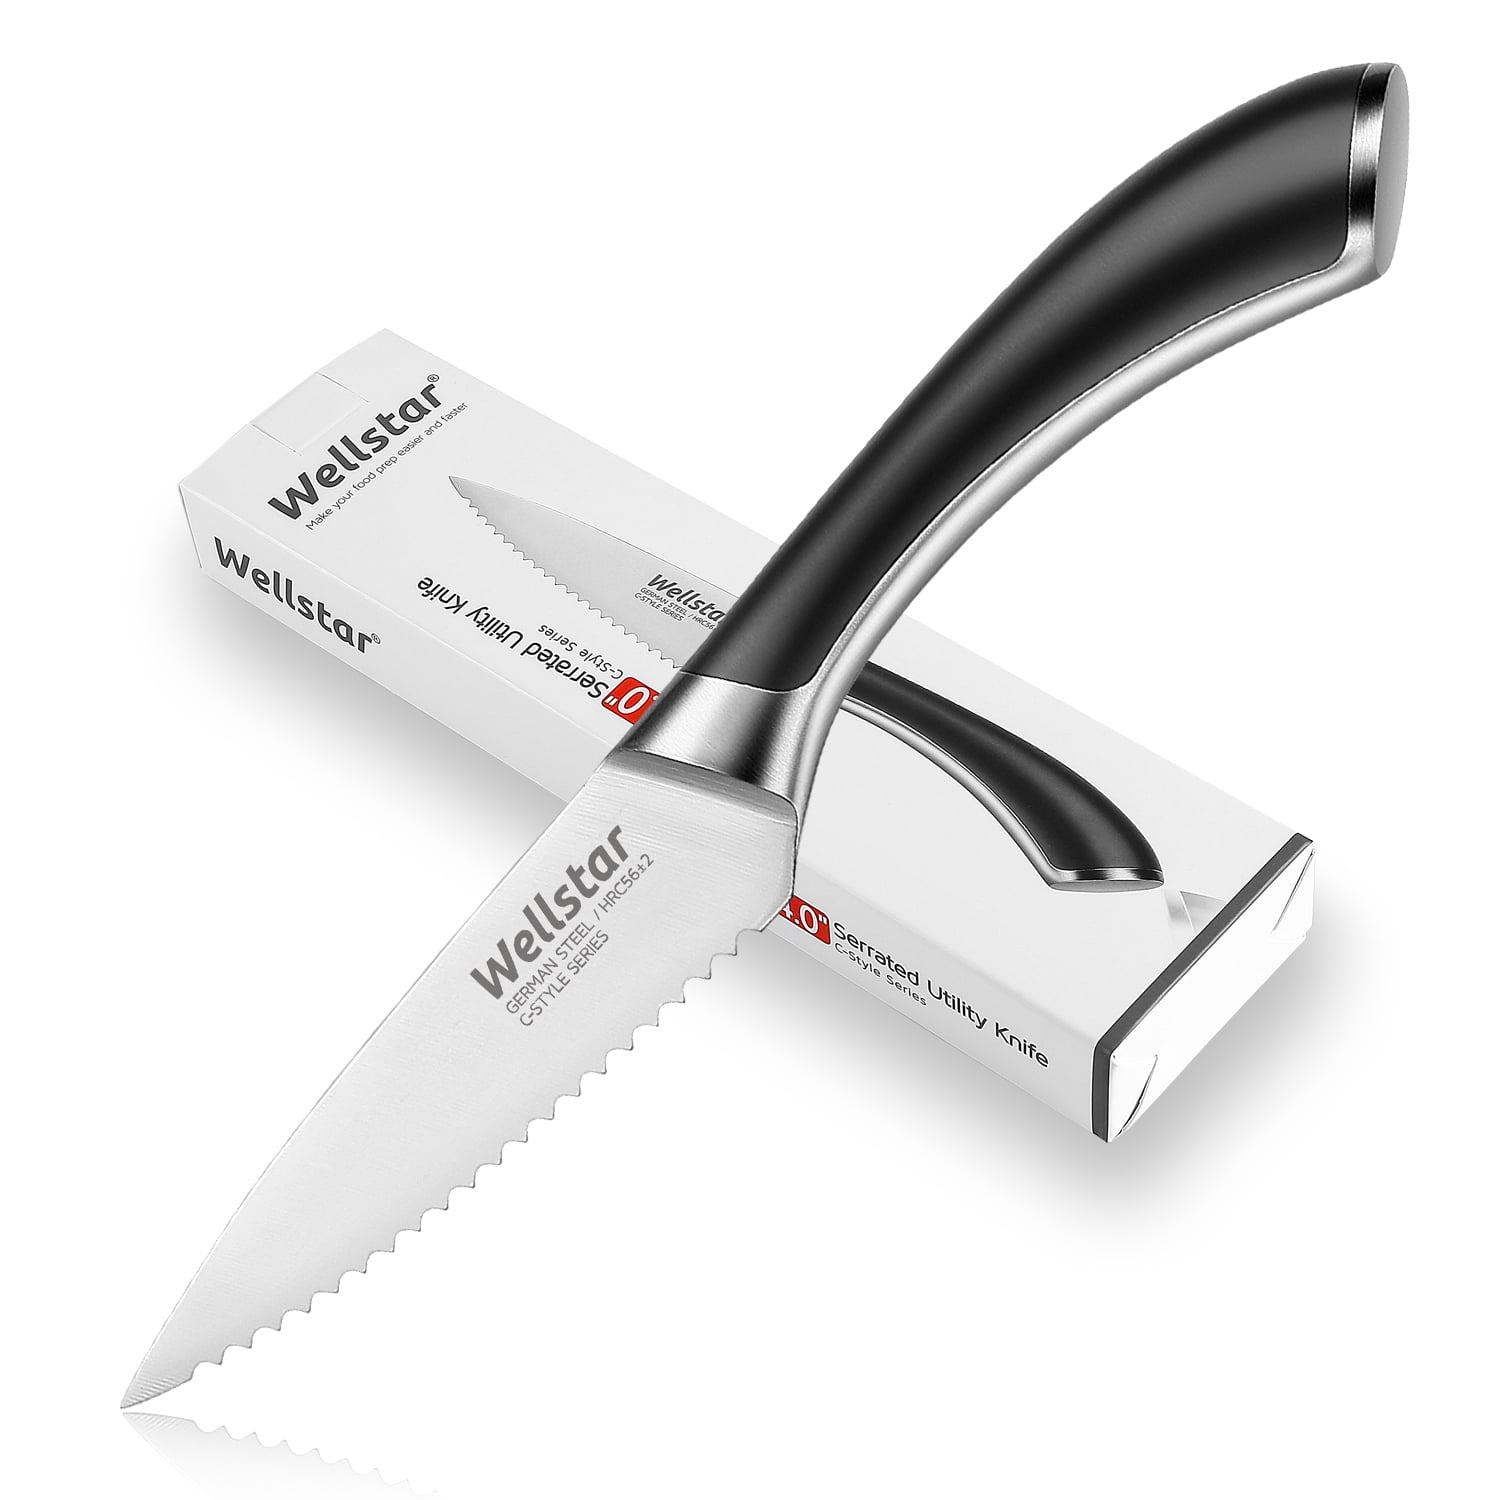 chef's knife 8 & paring knife 4 set, 4 STAR PROMO 11/19-12/31 - Whisk